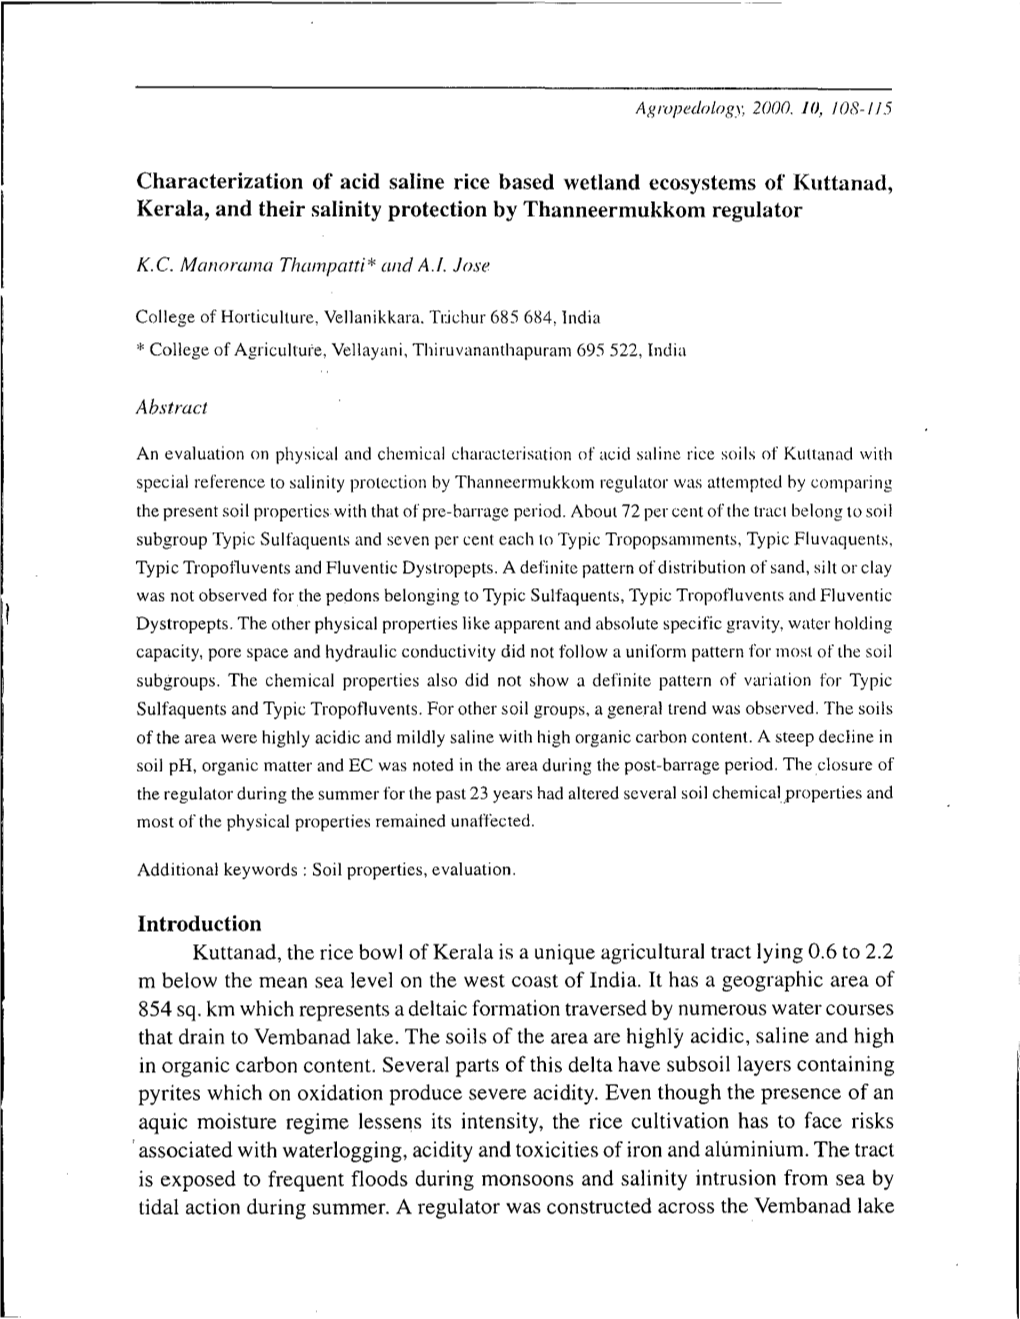 Characterization of Acid Saline Rice Based Wetland Ecosystems of Kuttanad, Kerala, and Their Salinity Protection by Thanneermukkom Regulator